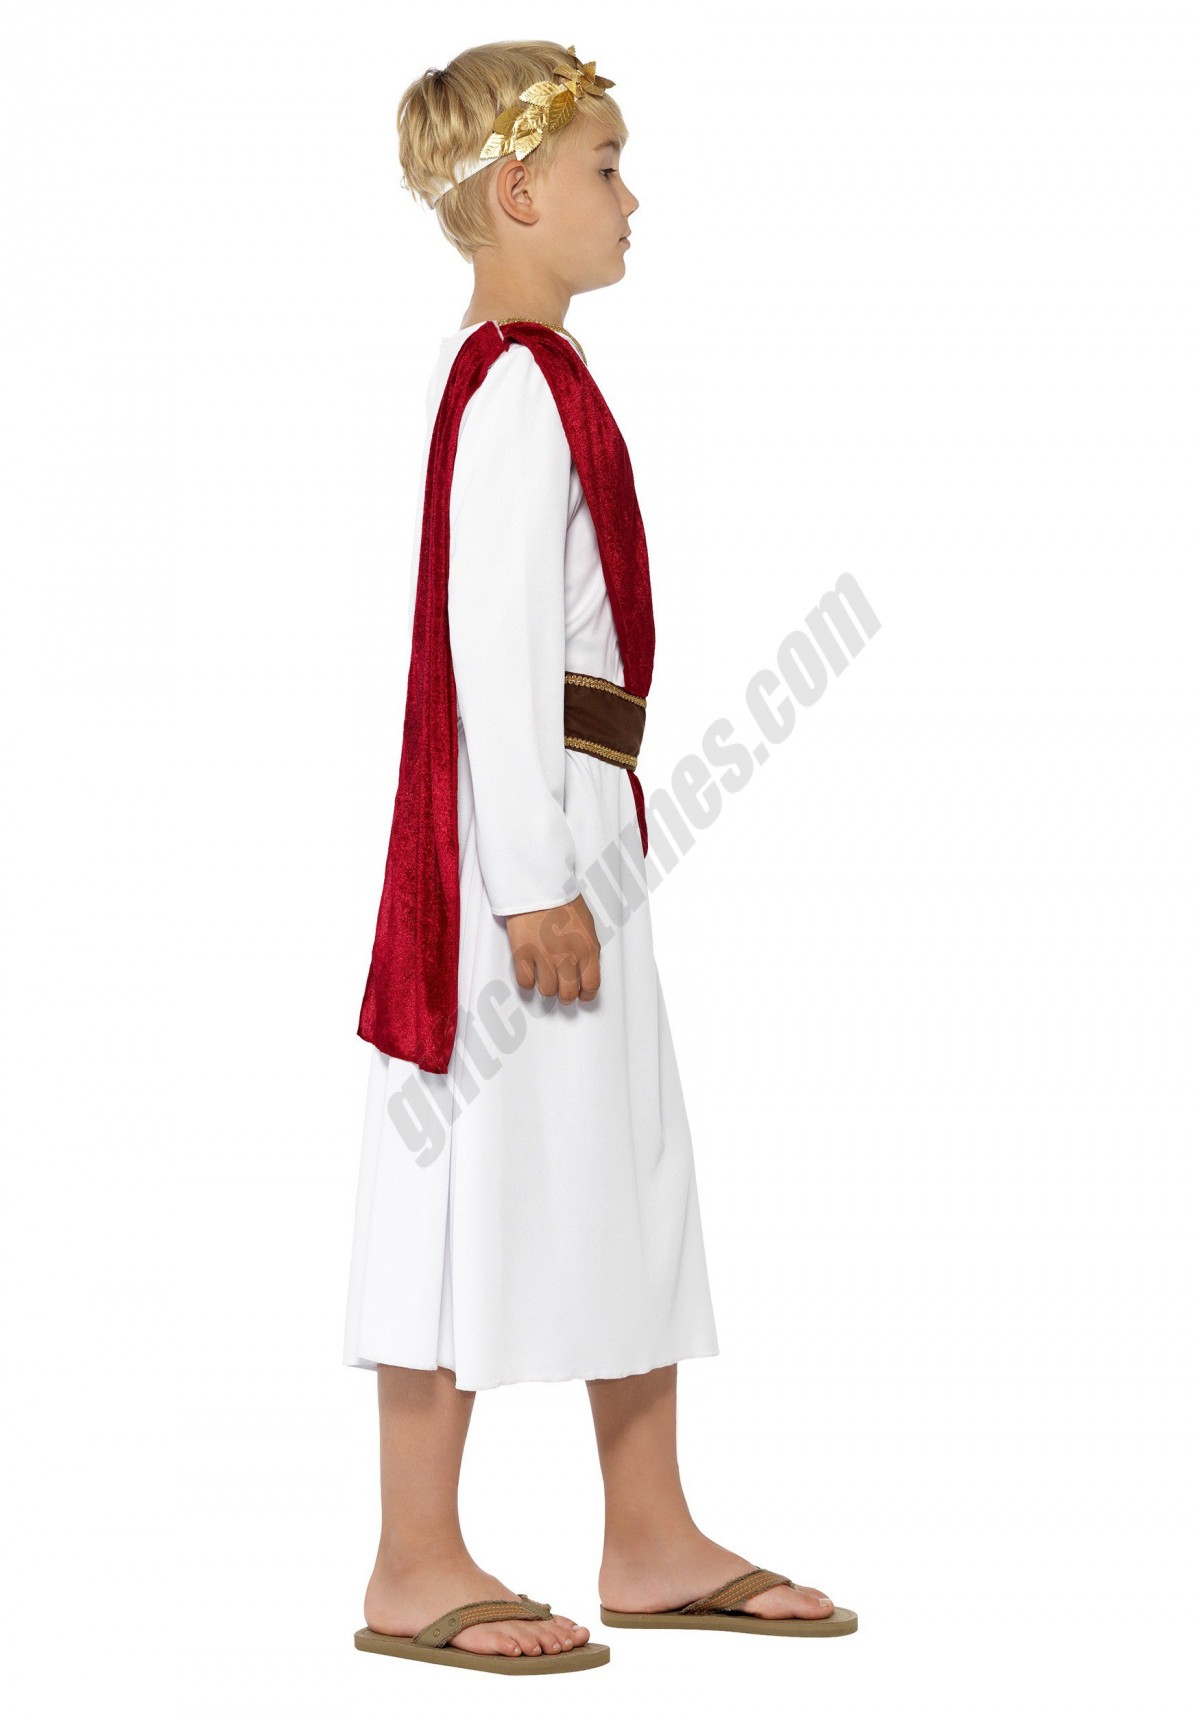 Child's Roman Boy Costume Promotions - -2